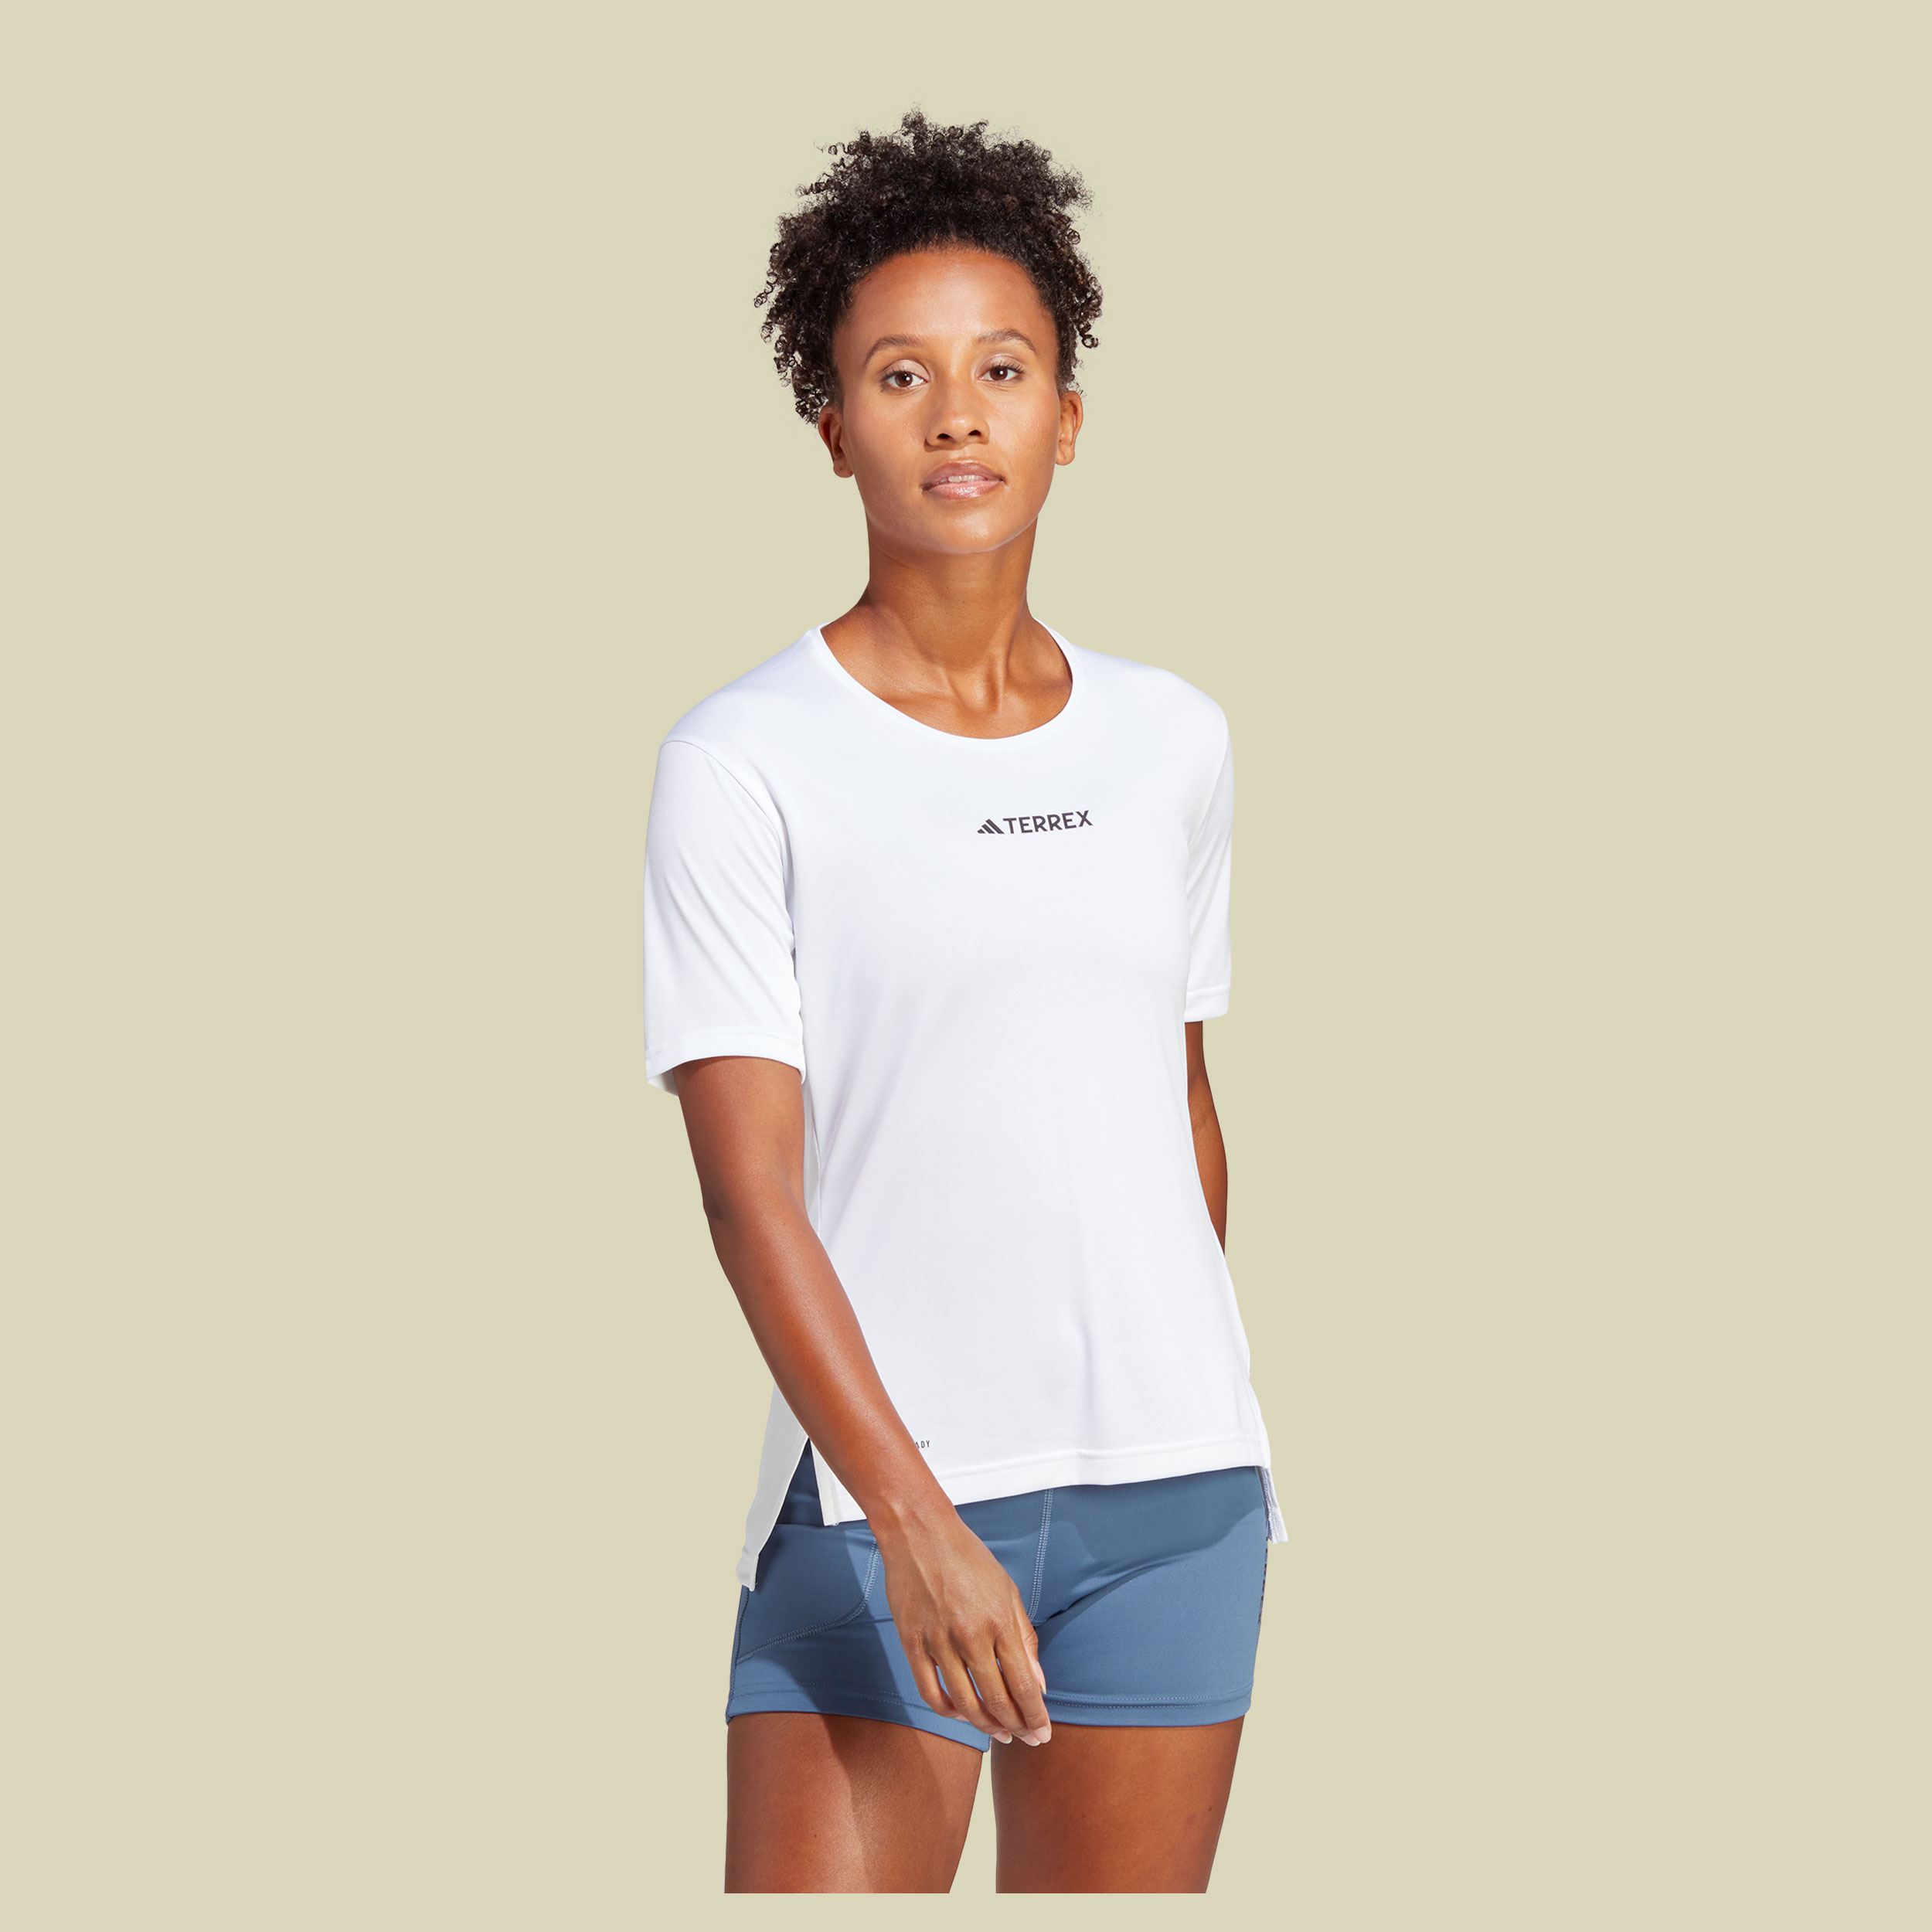 Terrex Multi T-Shirt Women Größe XL Farbe white